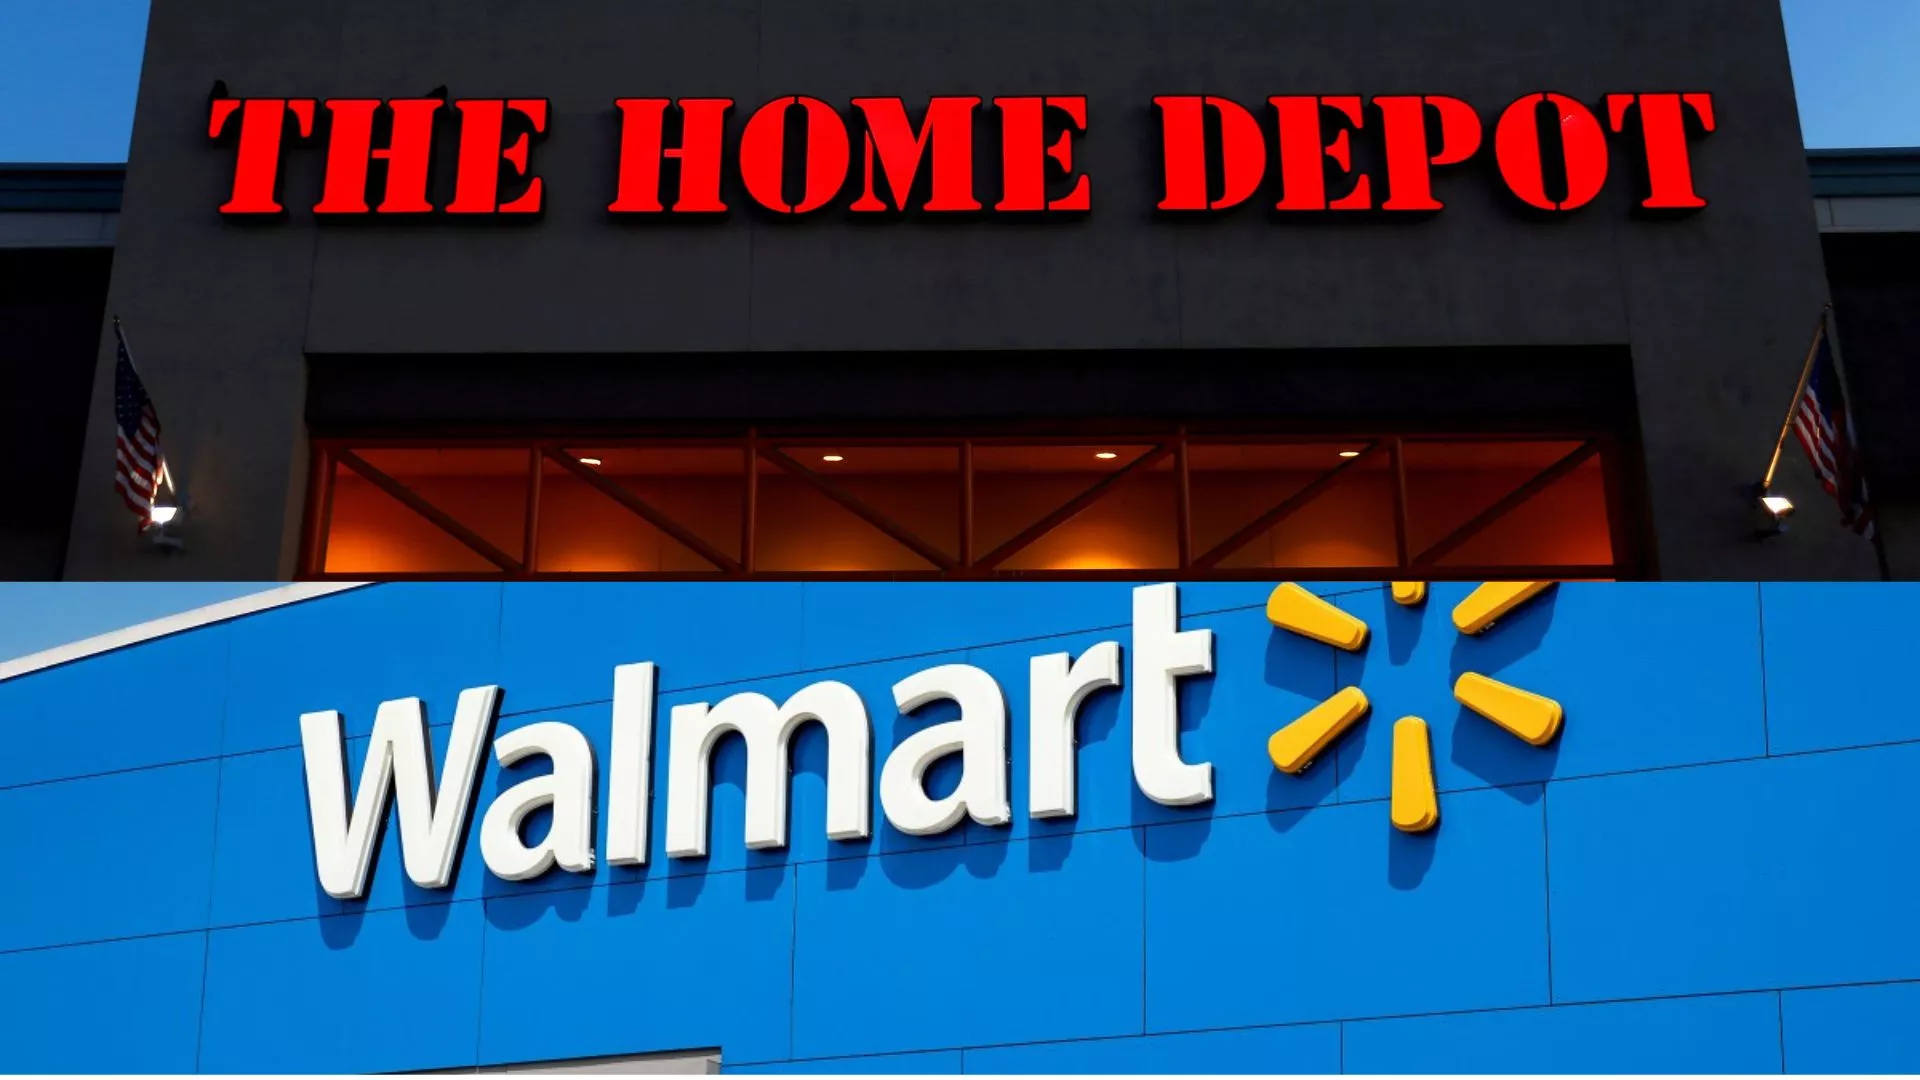 Is working at Home Depot better than Walmart?